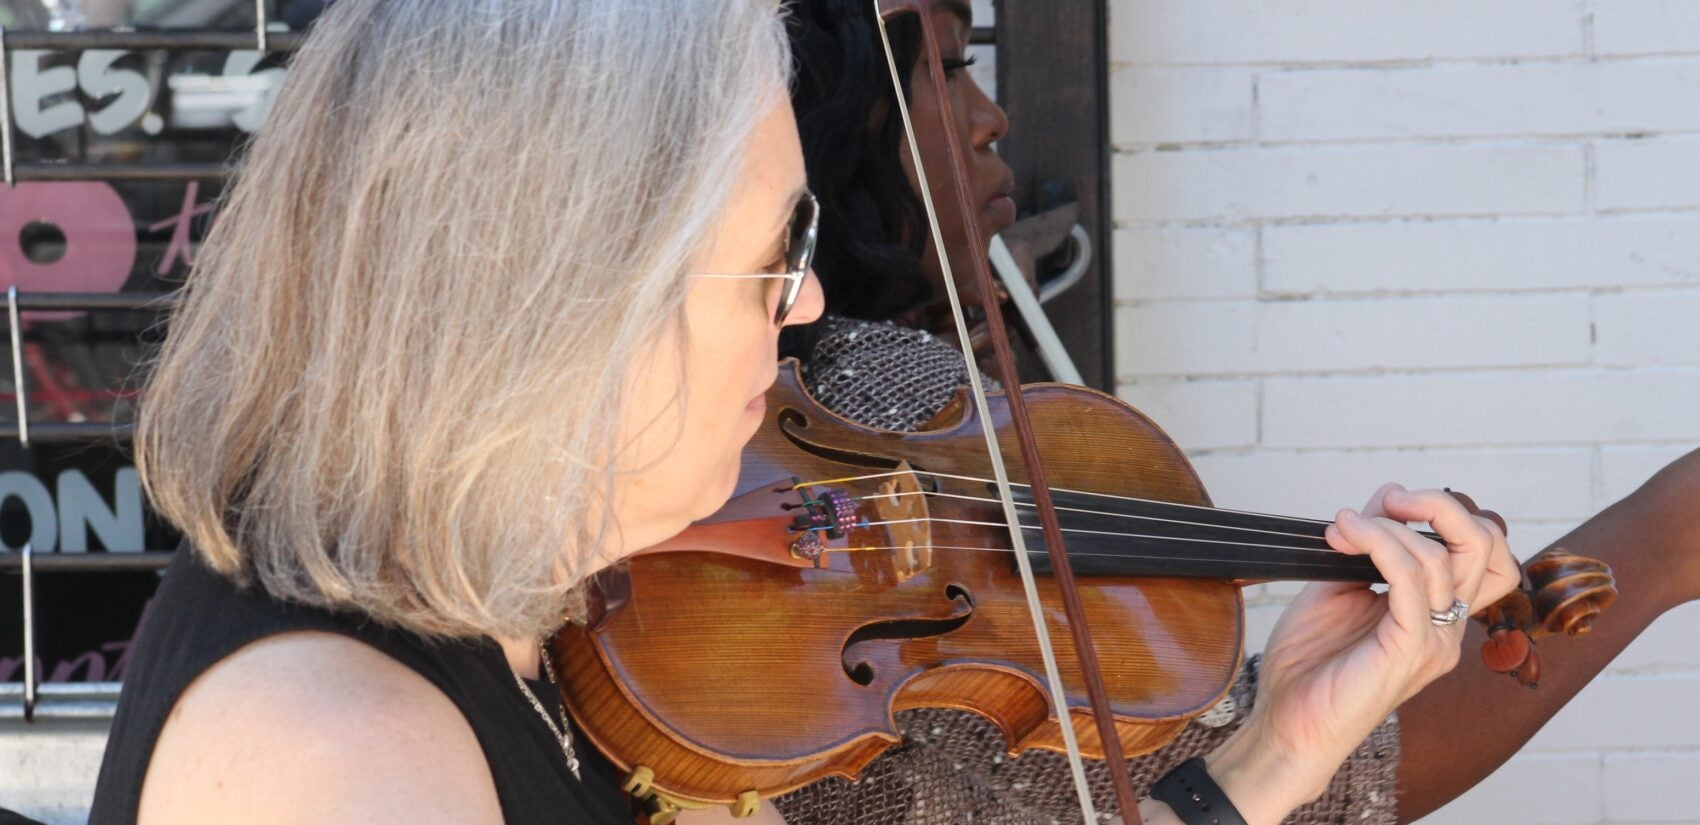 a person plays a viola